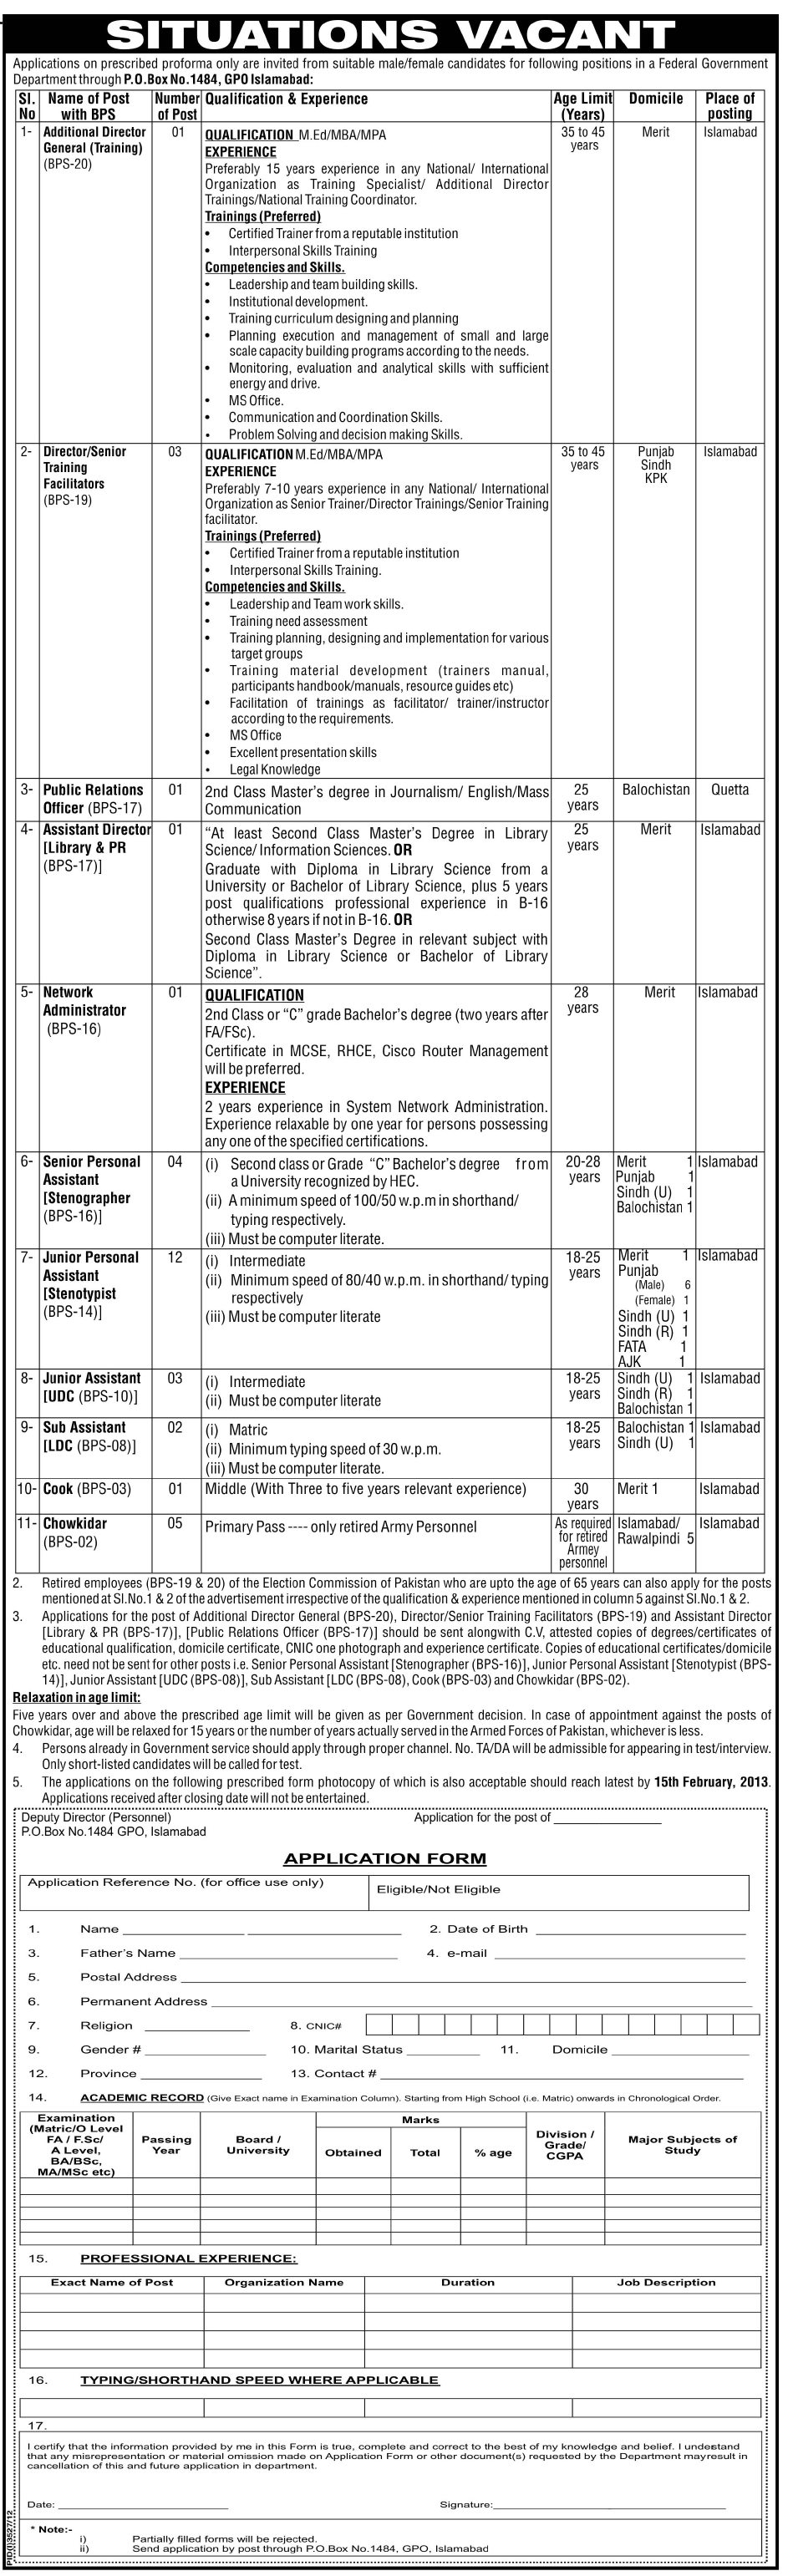 PO Box 1484 GPO Islamabad Jobs 2013 Application Form